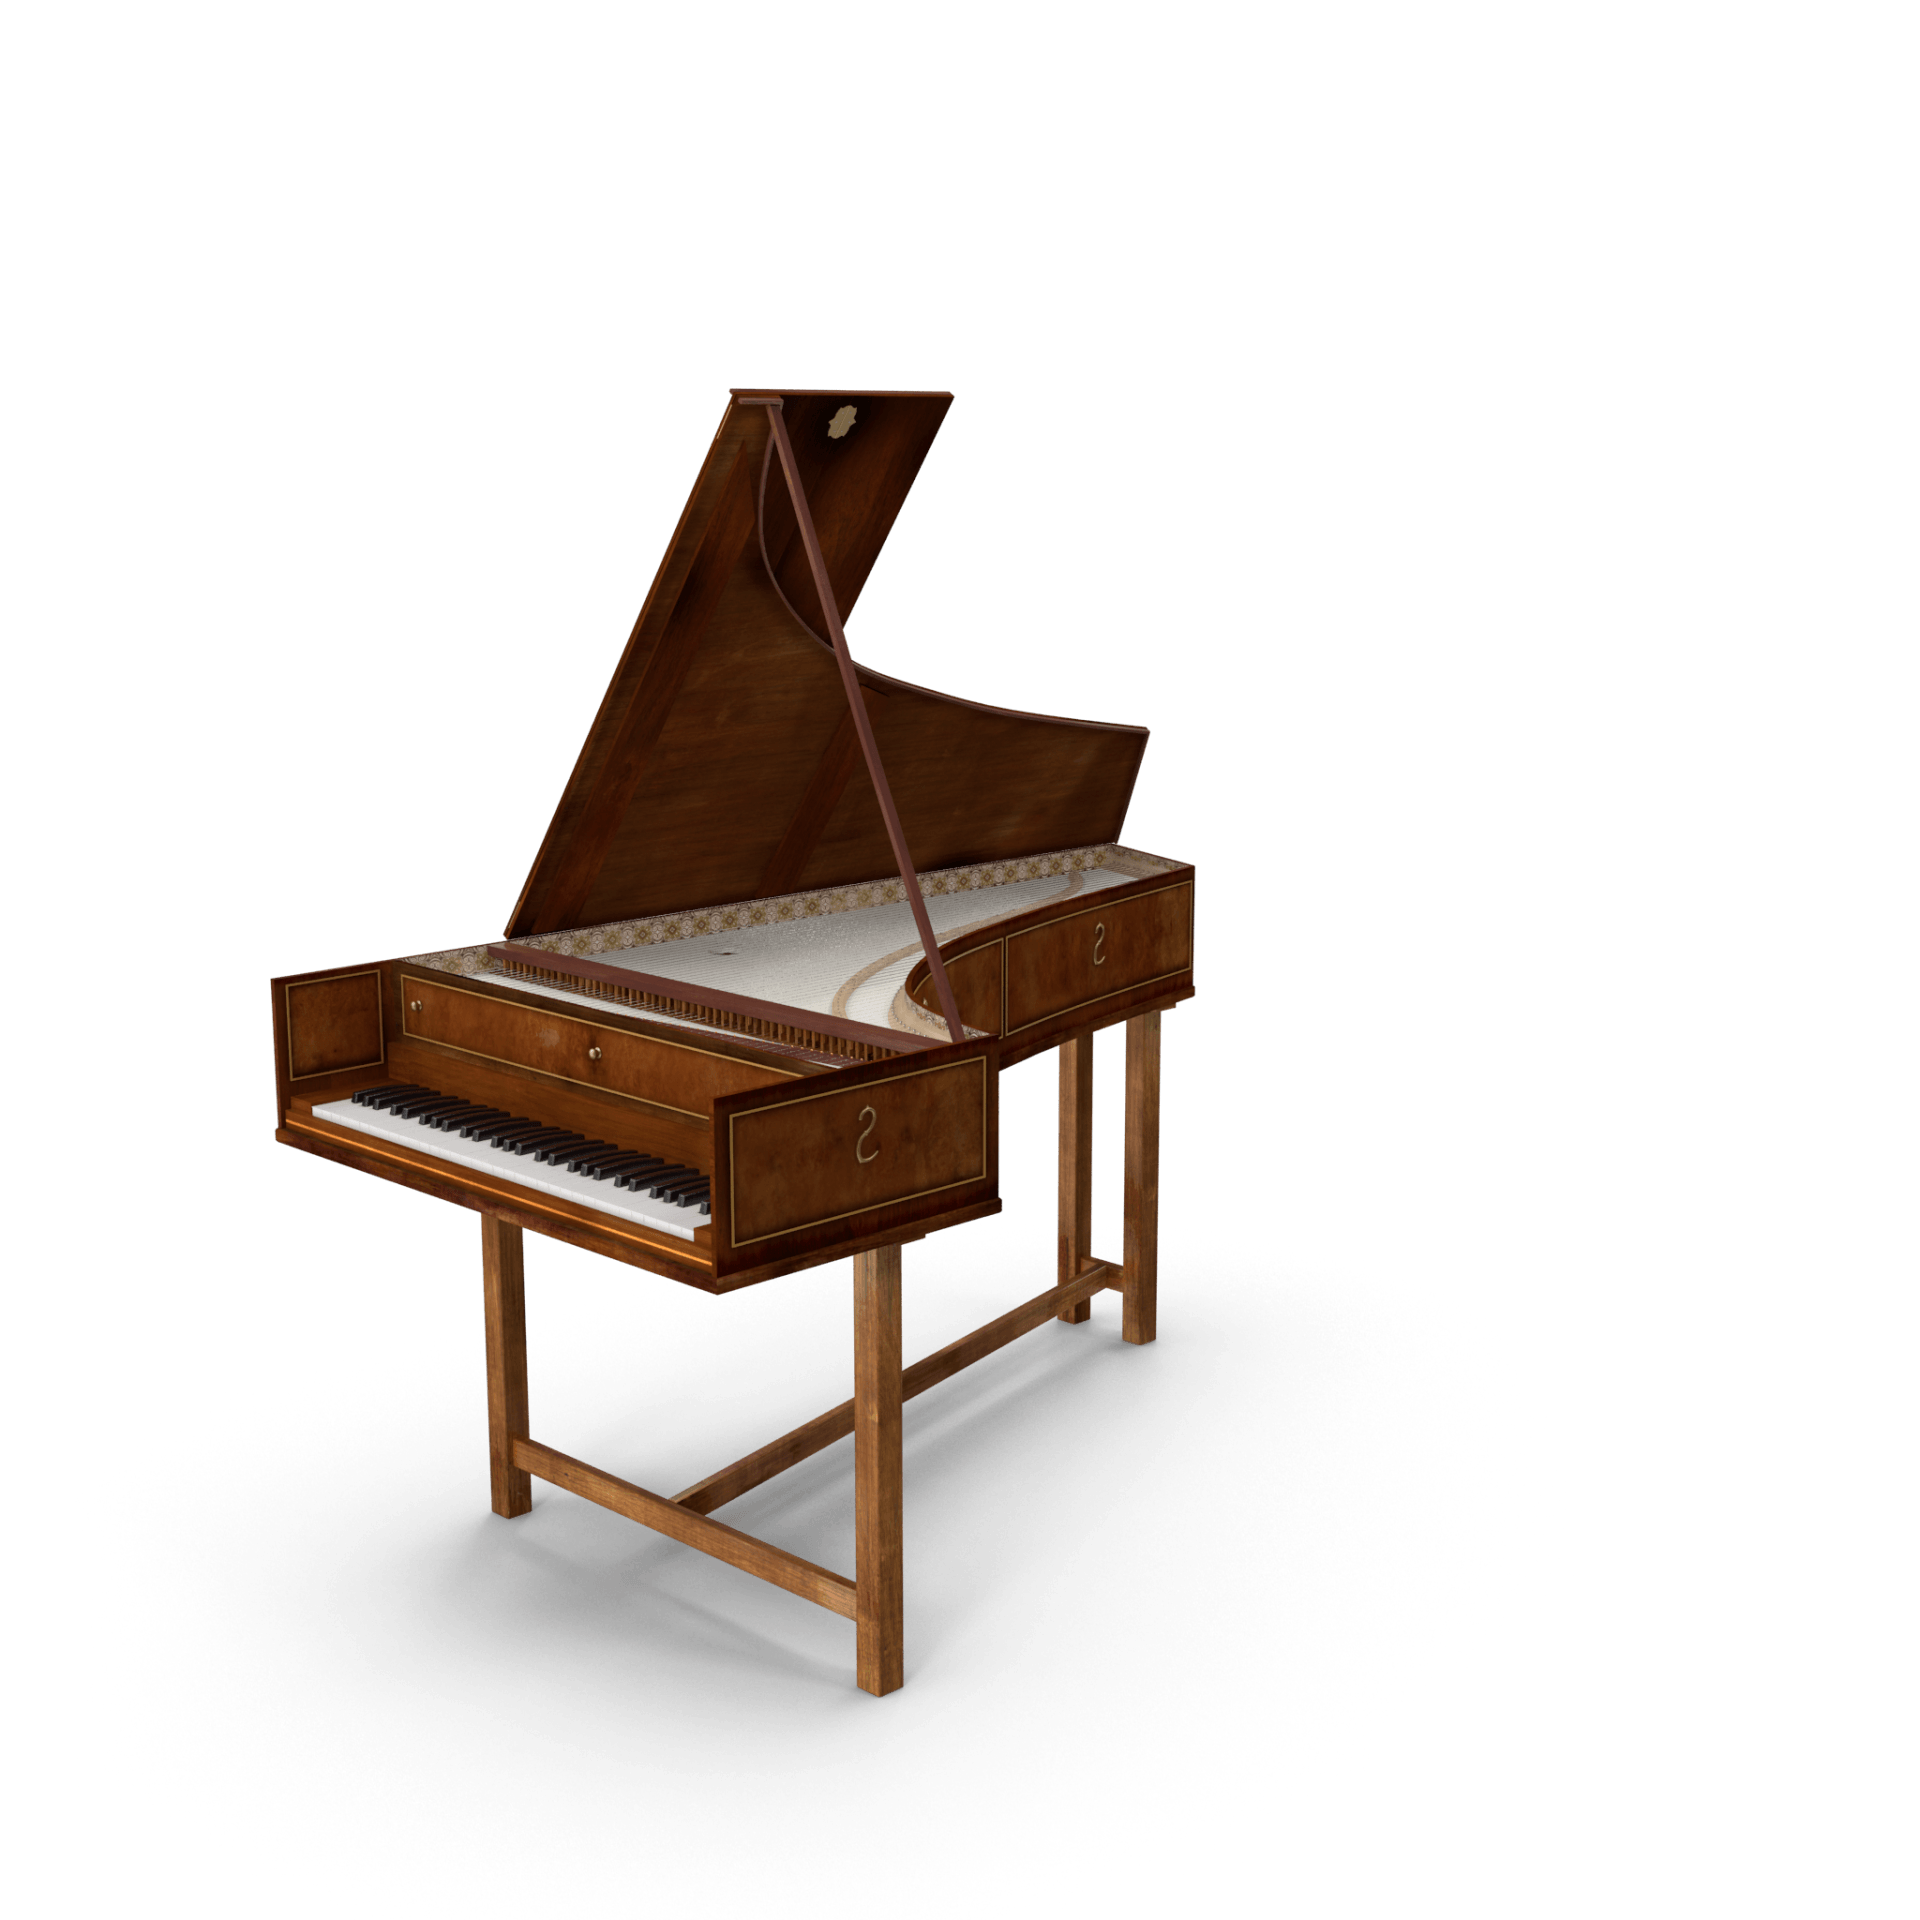 Harpsichord and organ